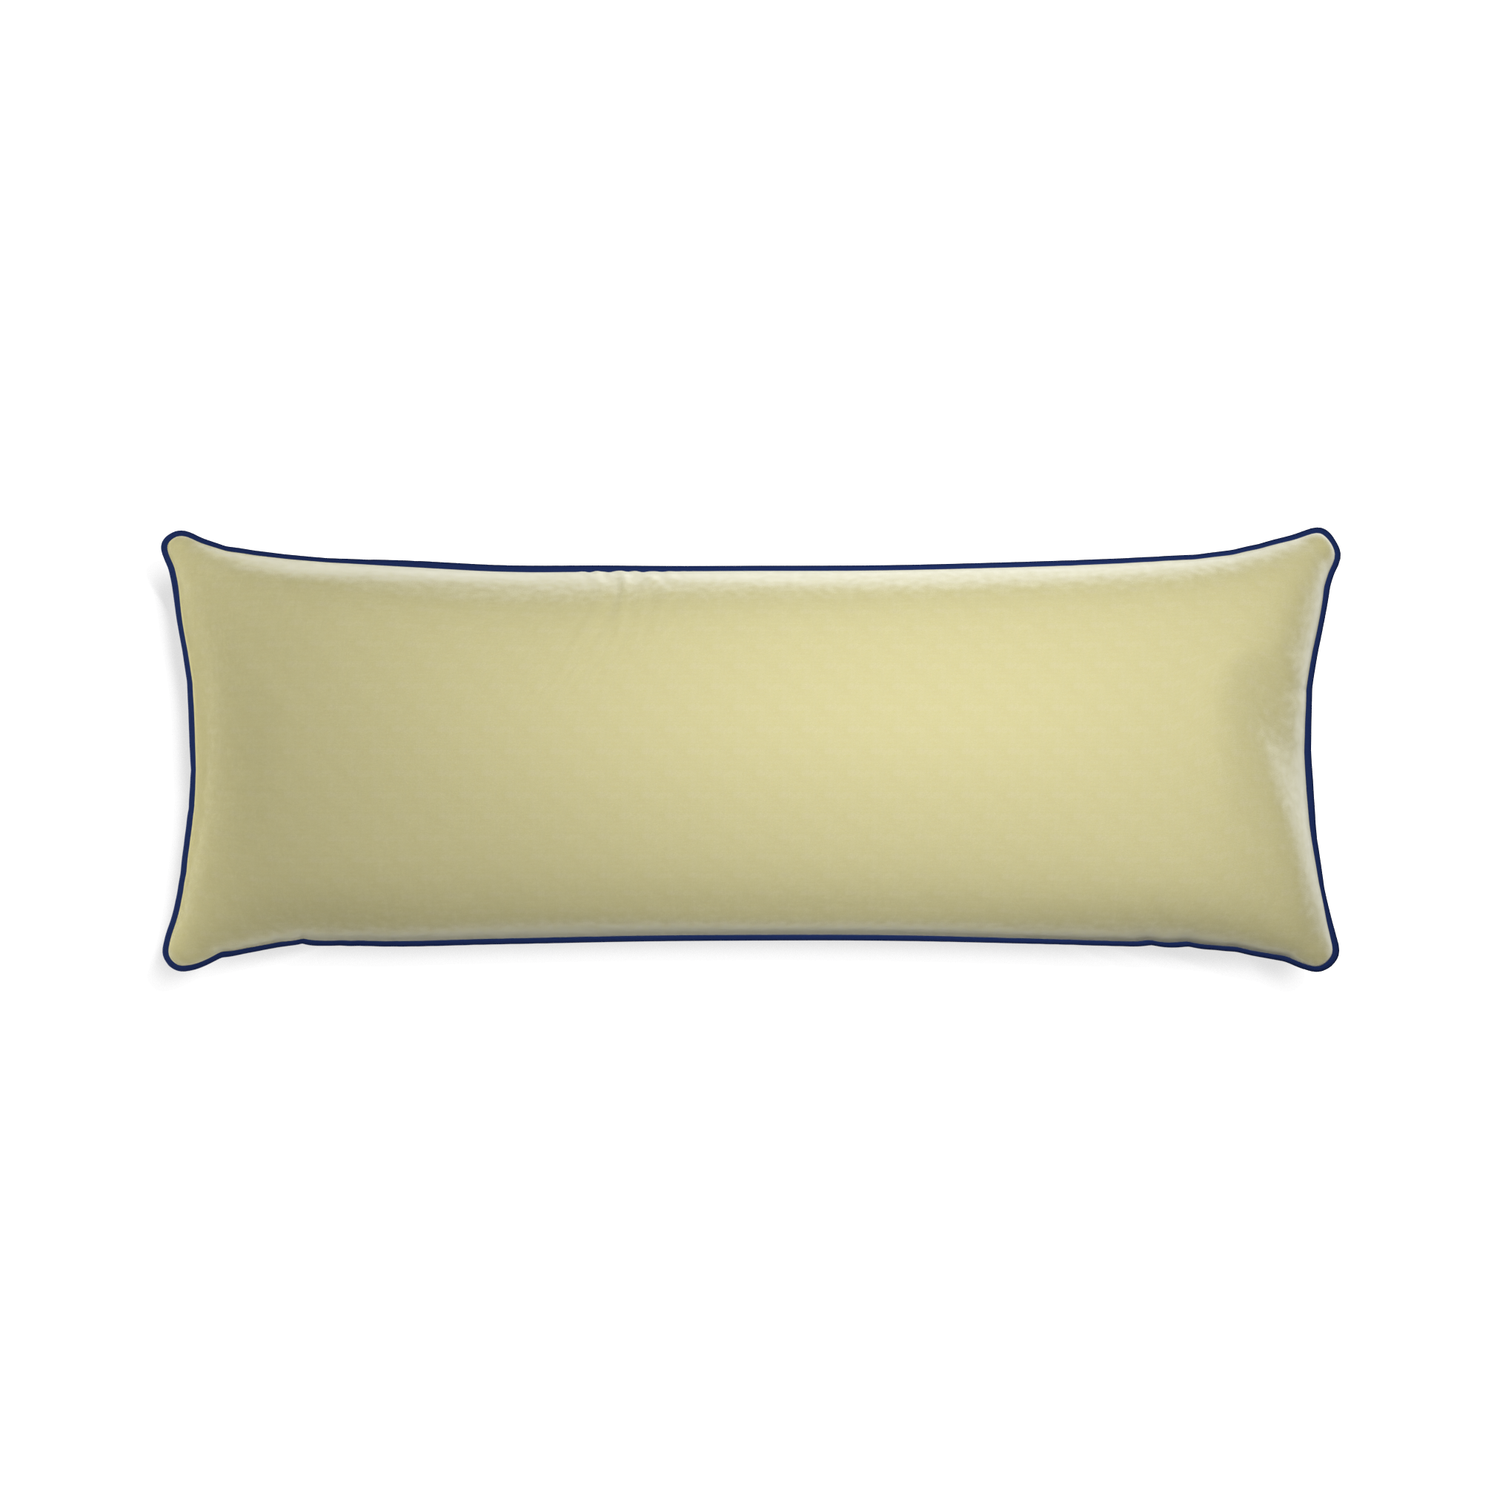 rectangle light green velvet pillow with navy blue piping